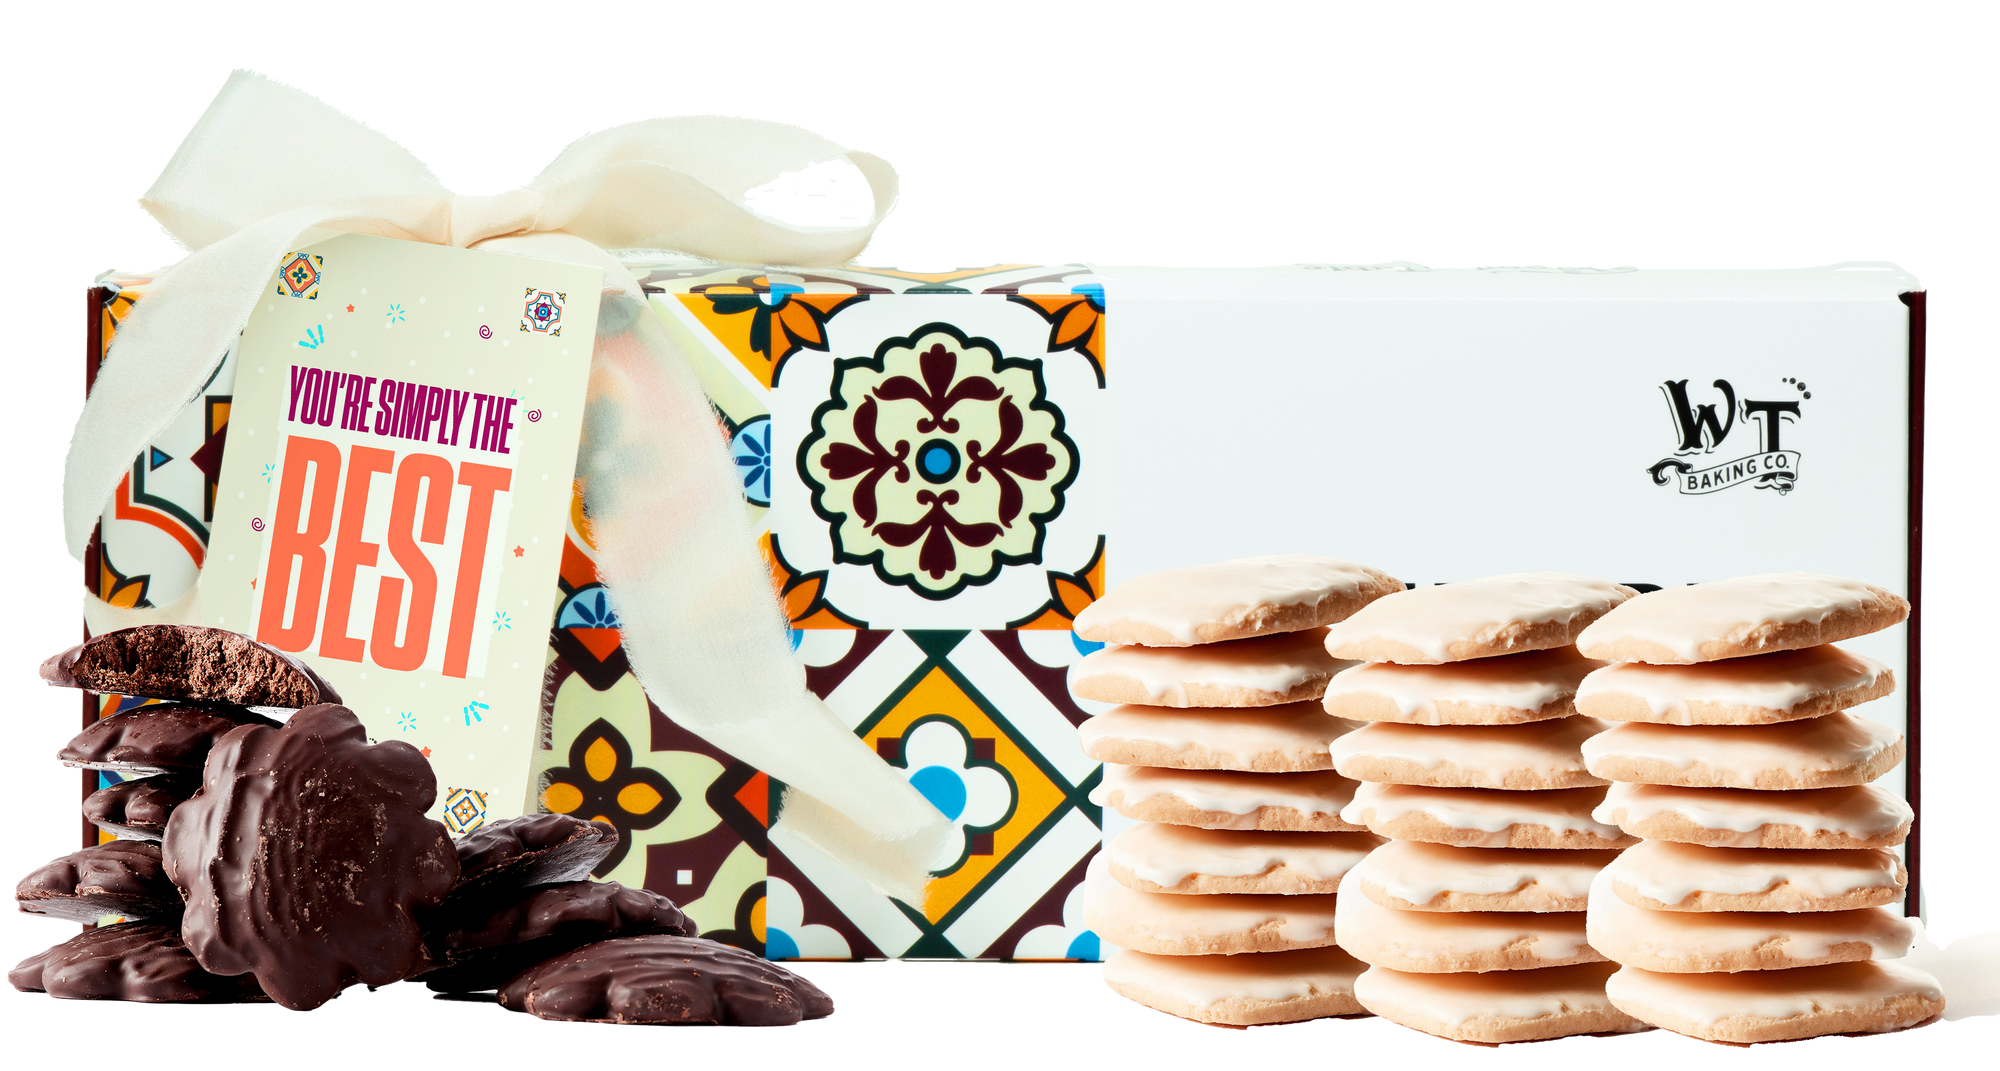 Design Your Own Box: Tea Cookies - No Gluten Wooden Table Baking Co.